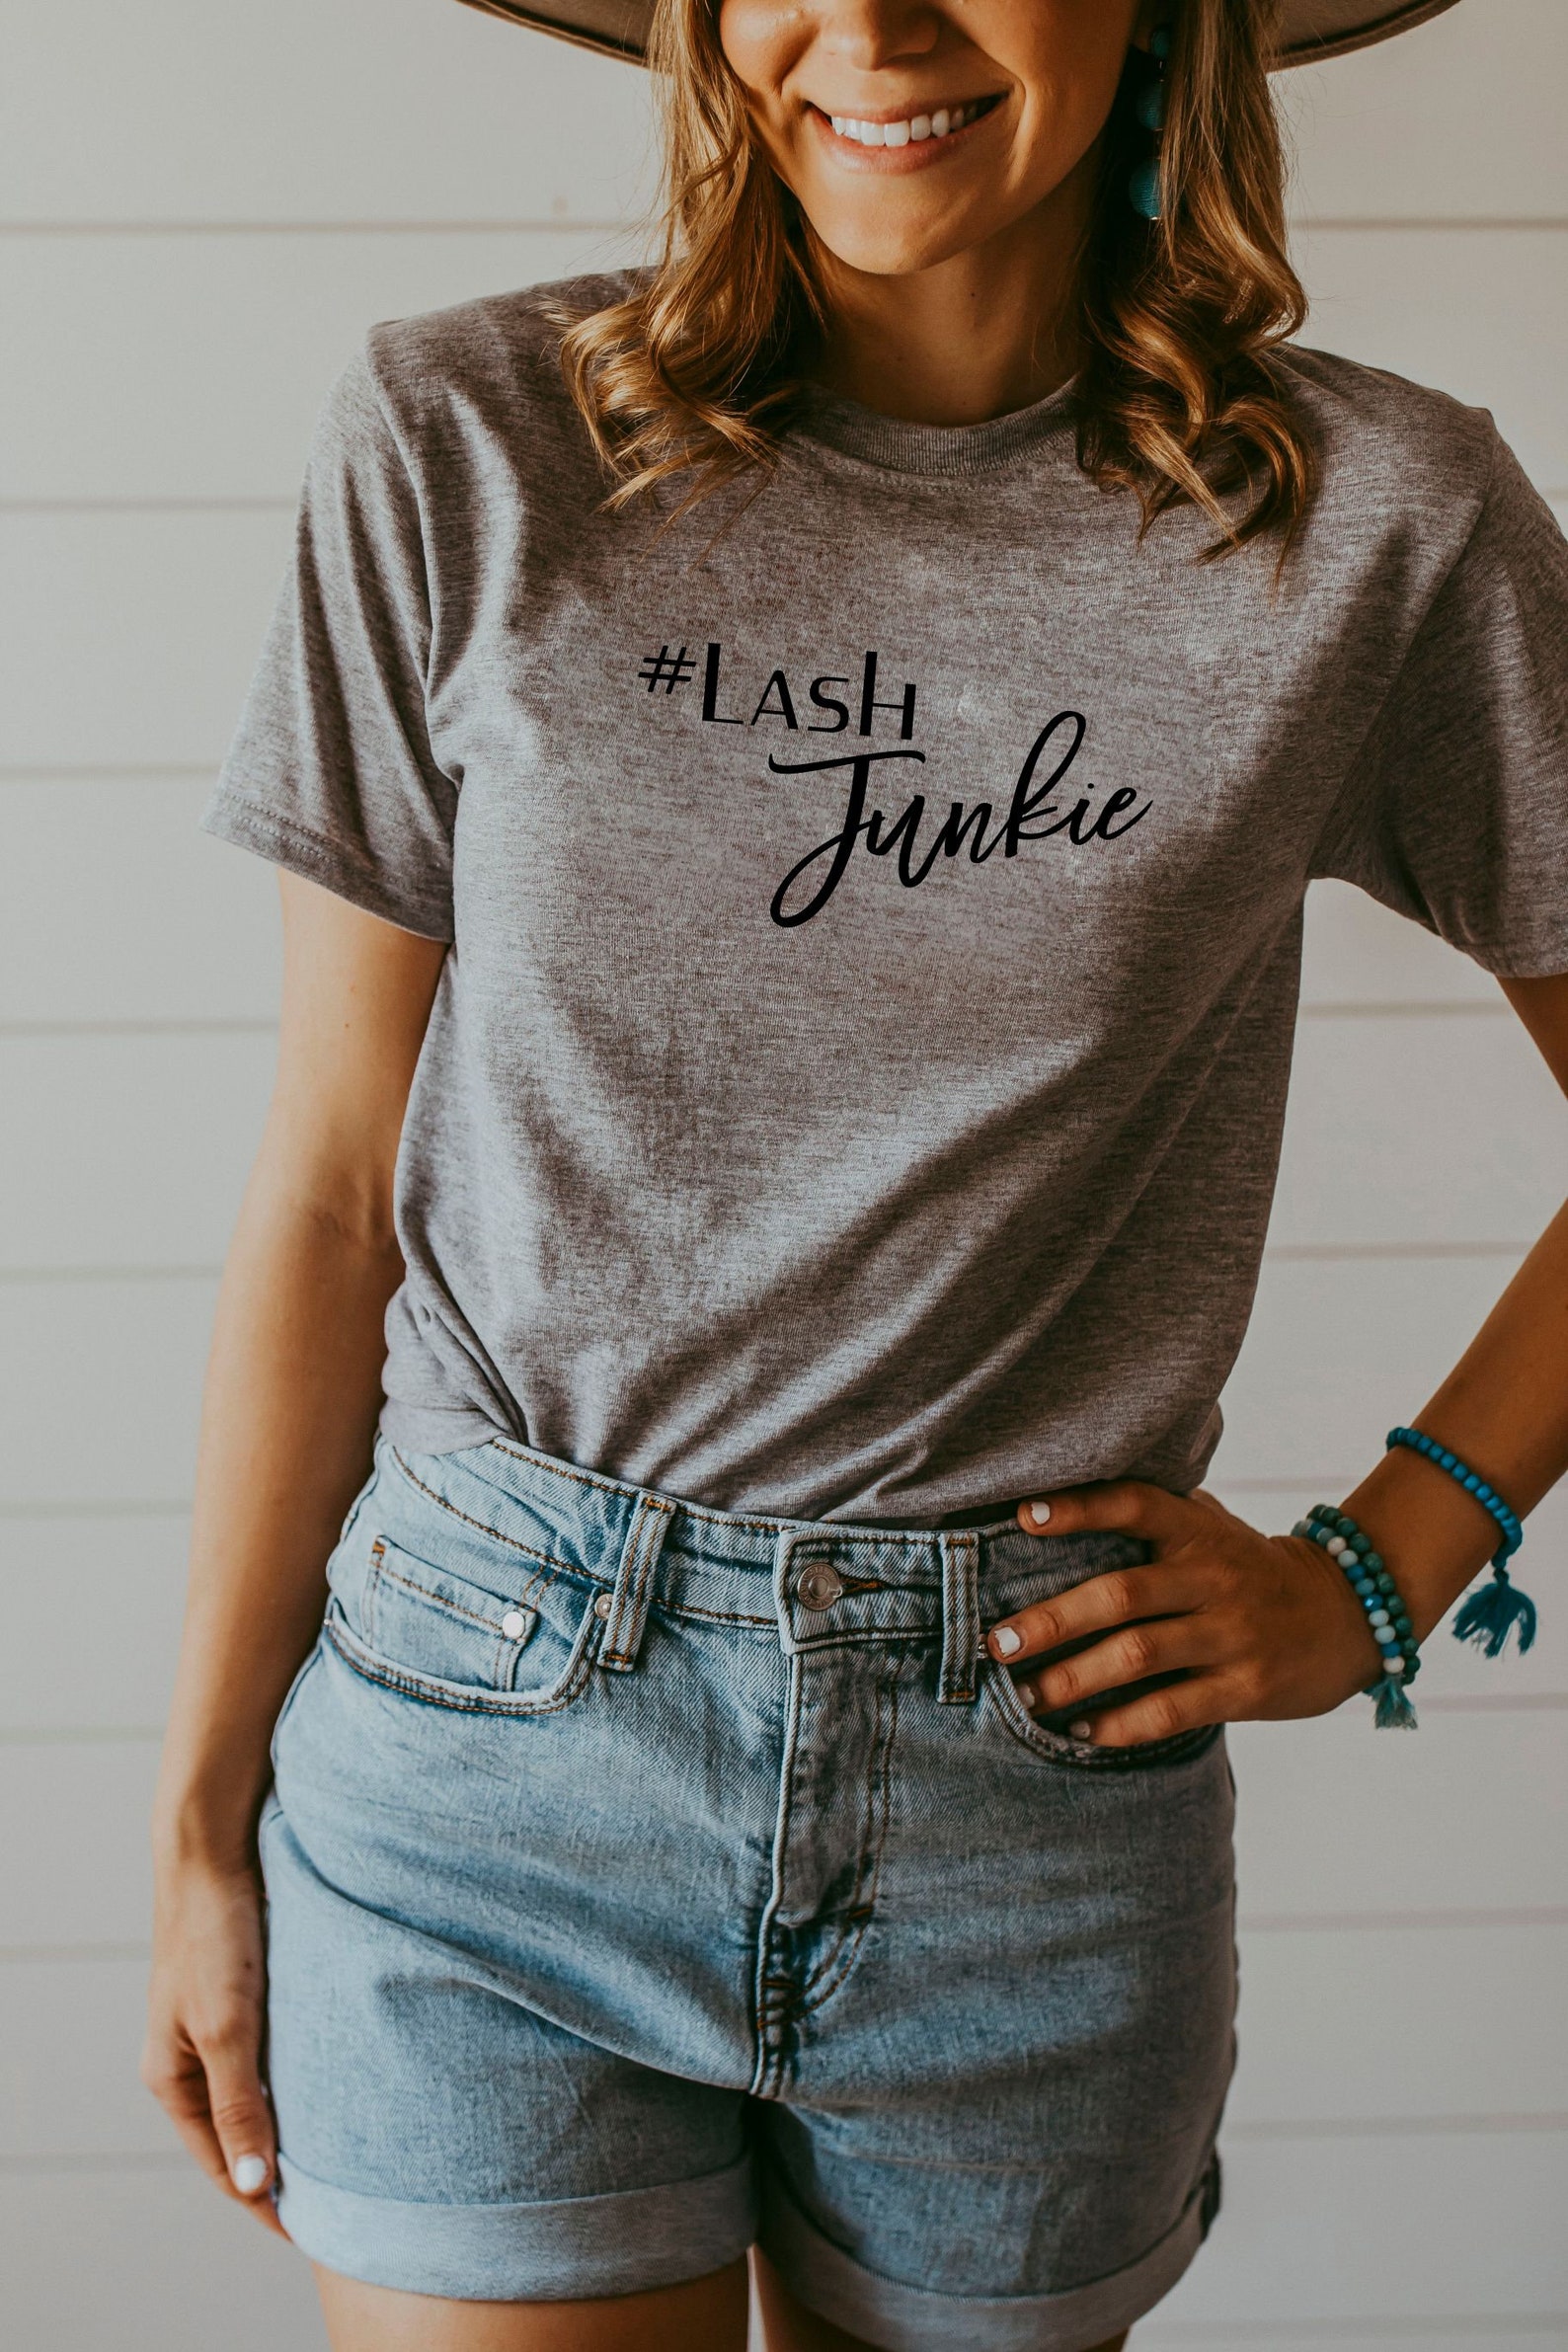 Lash Junkie Shirt Hairstylist T-shirt Graphic Tee Salon | Etsy